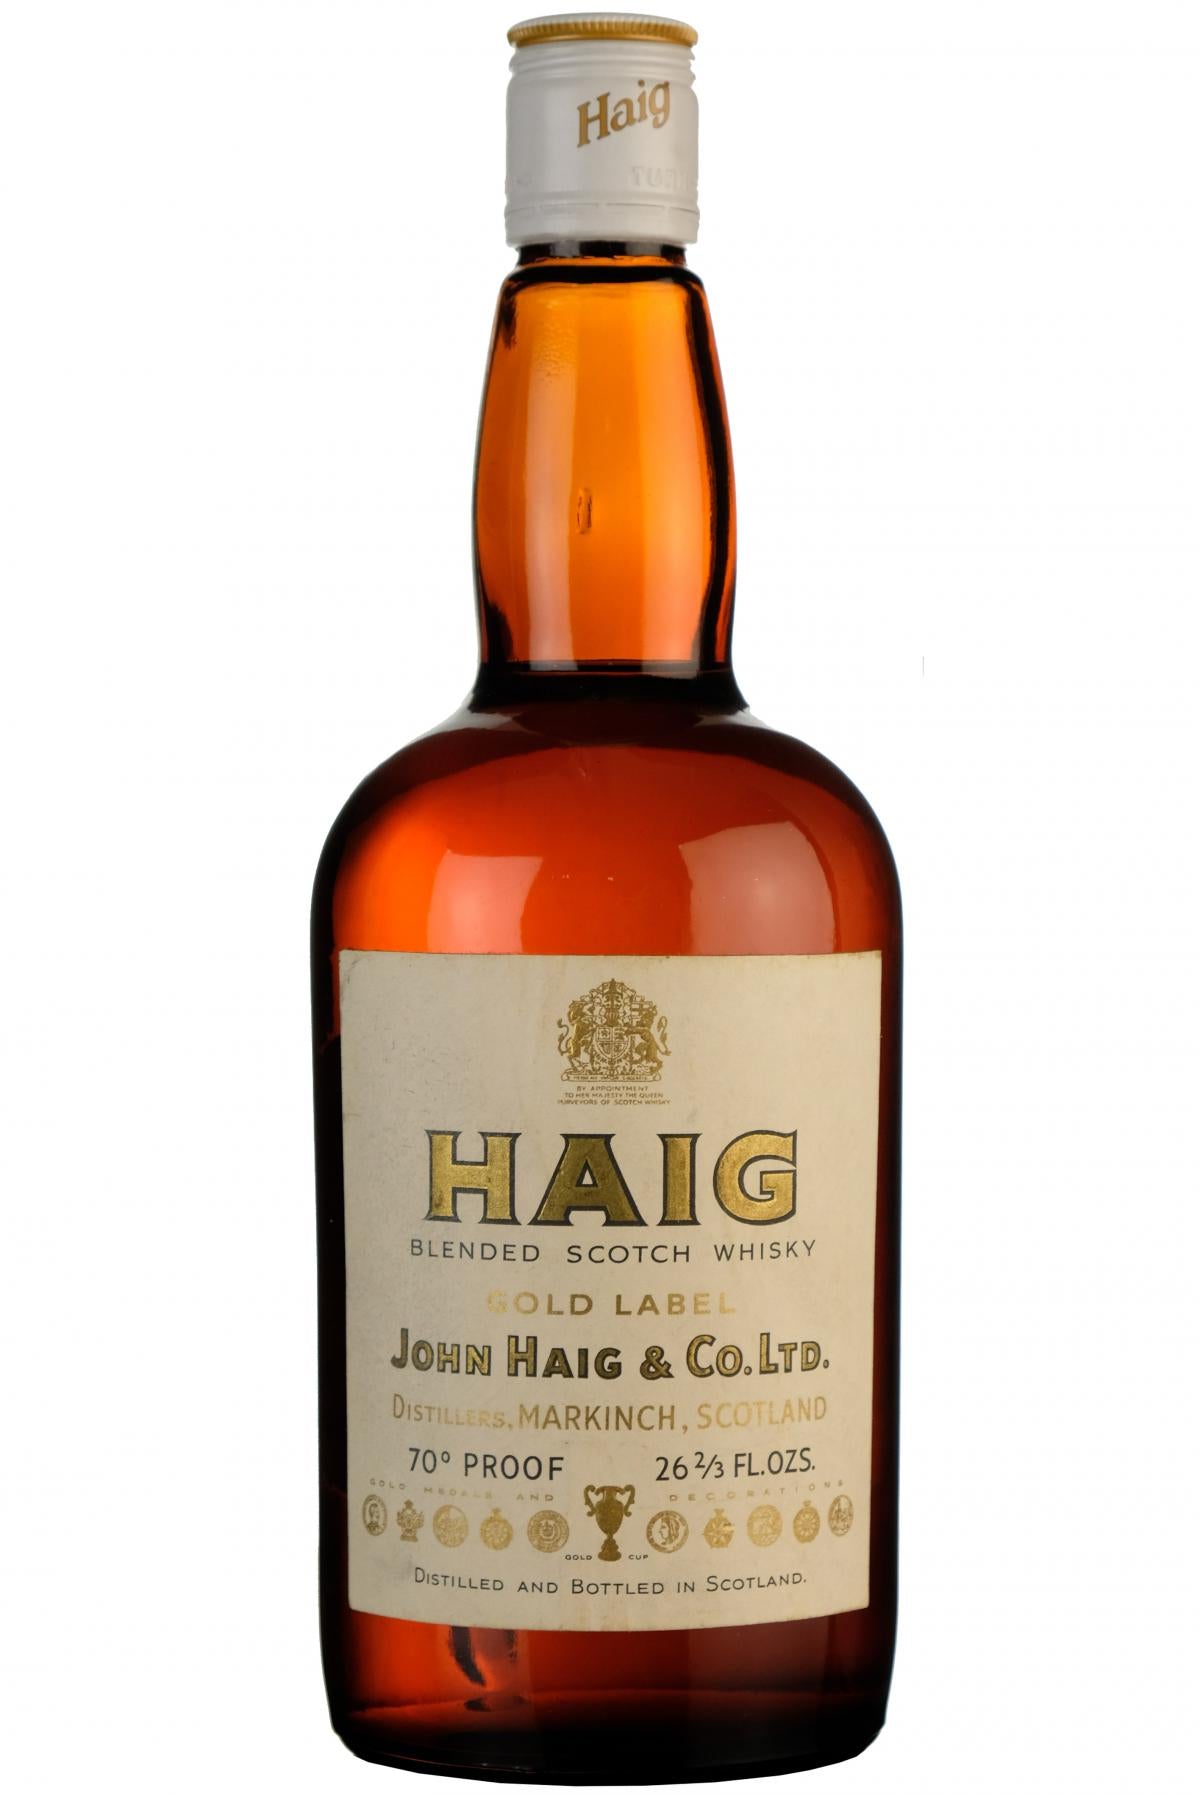 haig gold label 1970s, blended soctch whisky